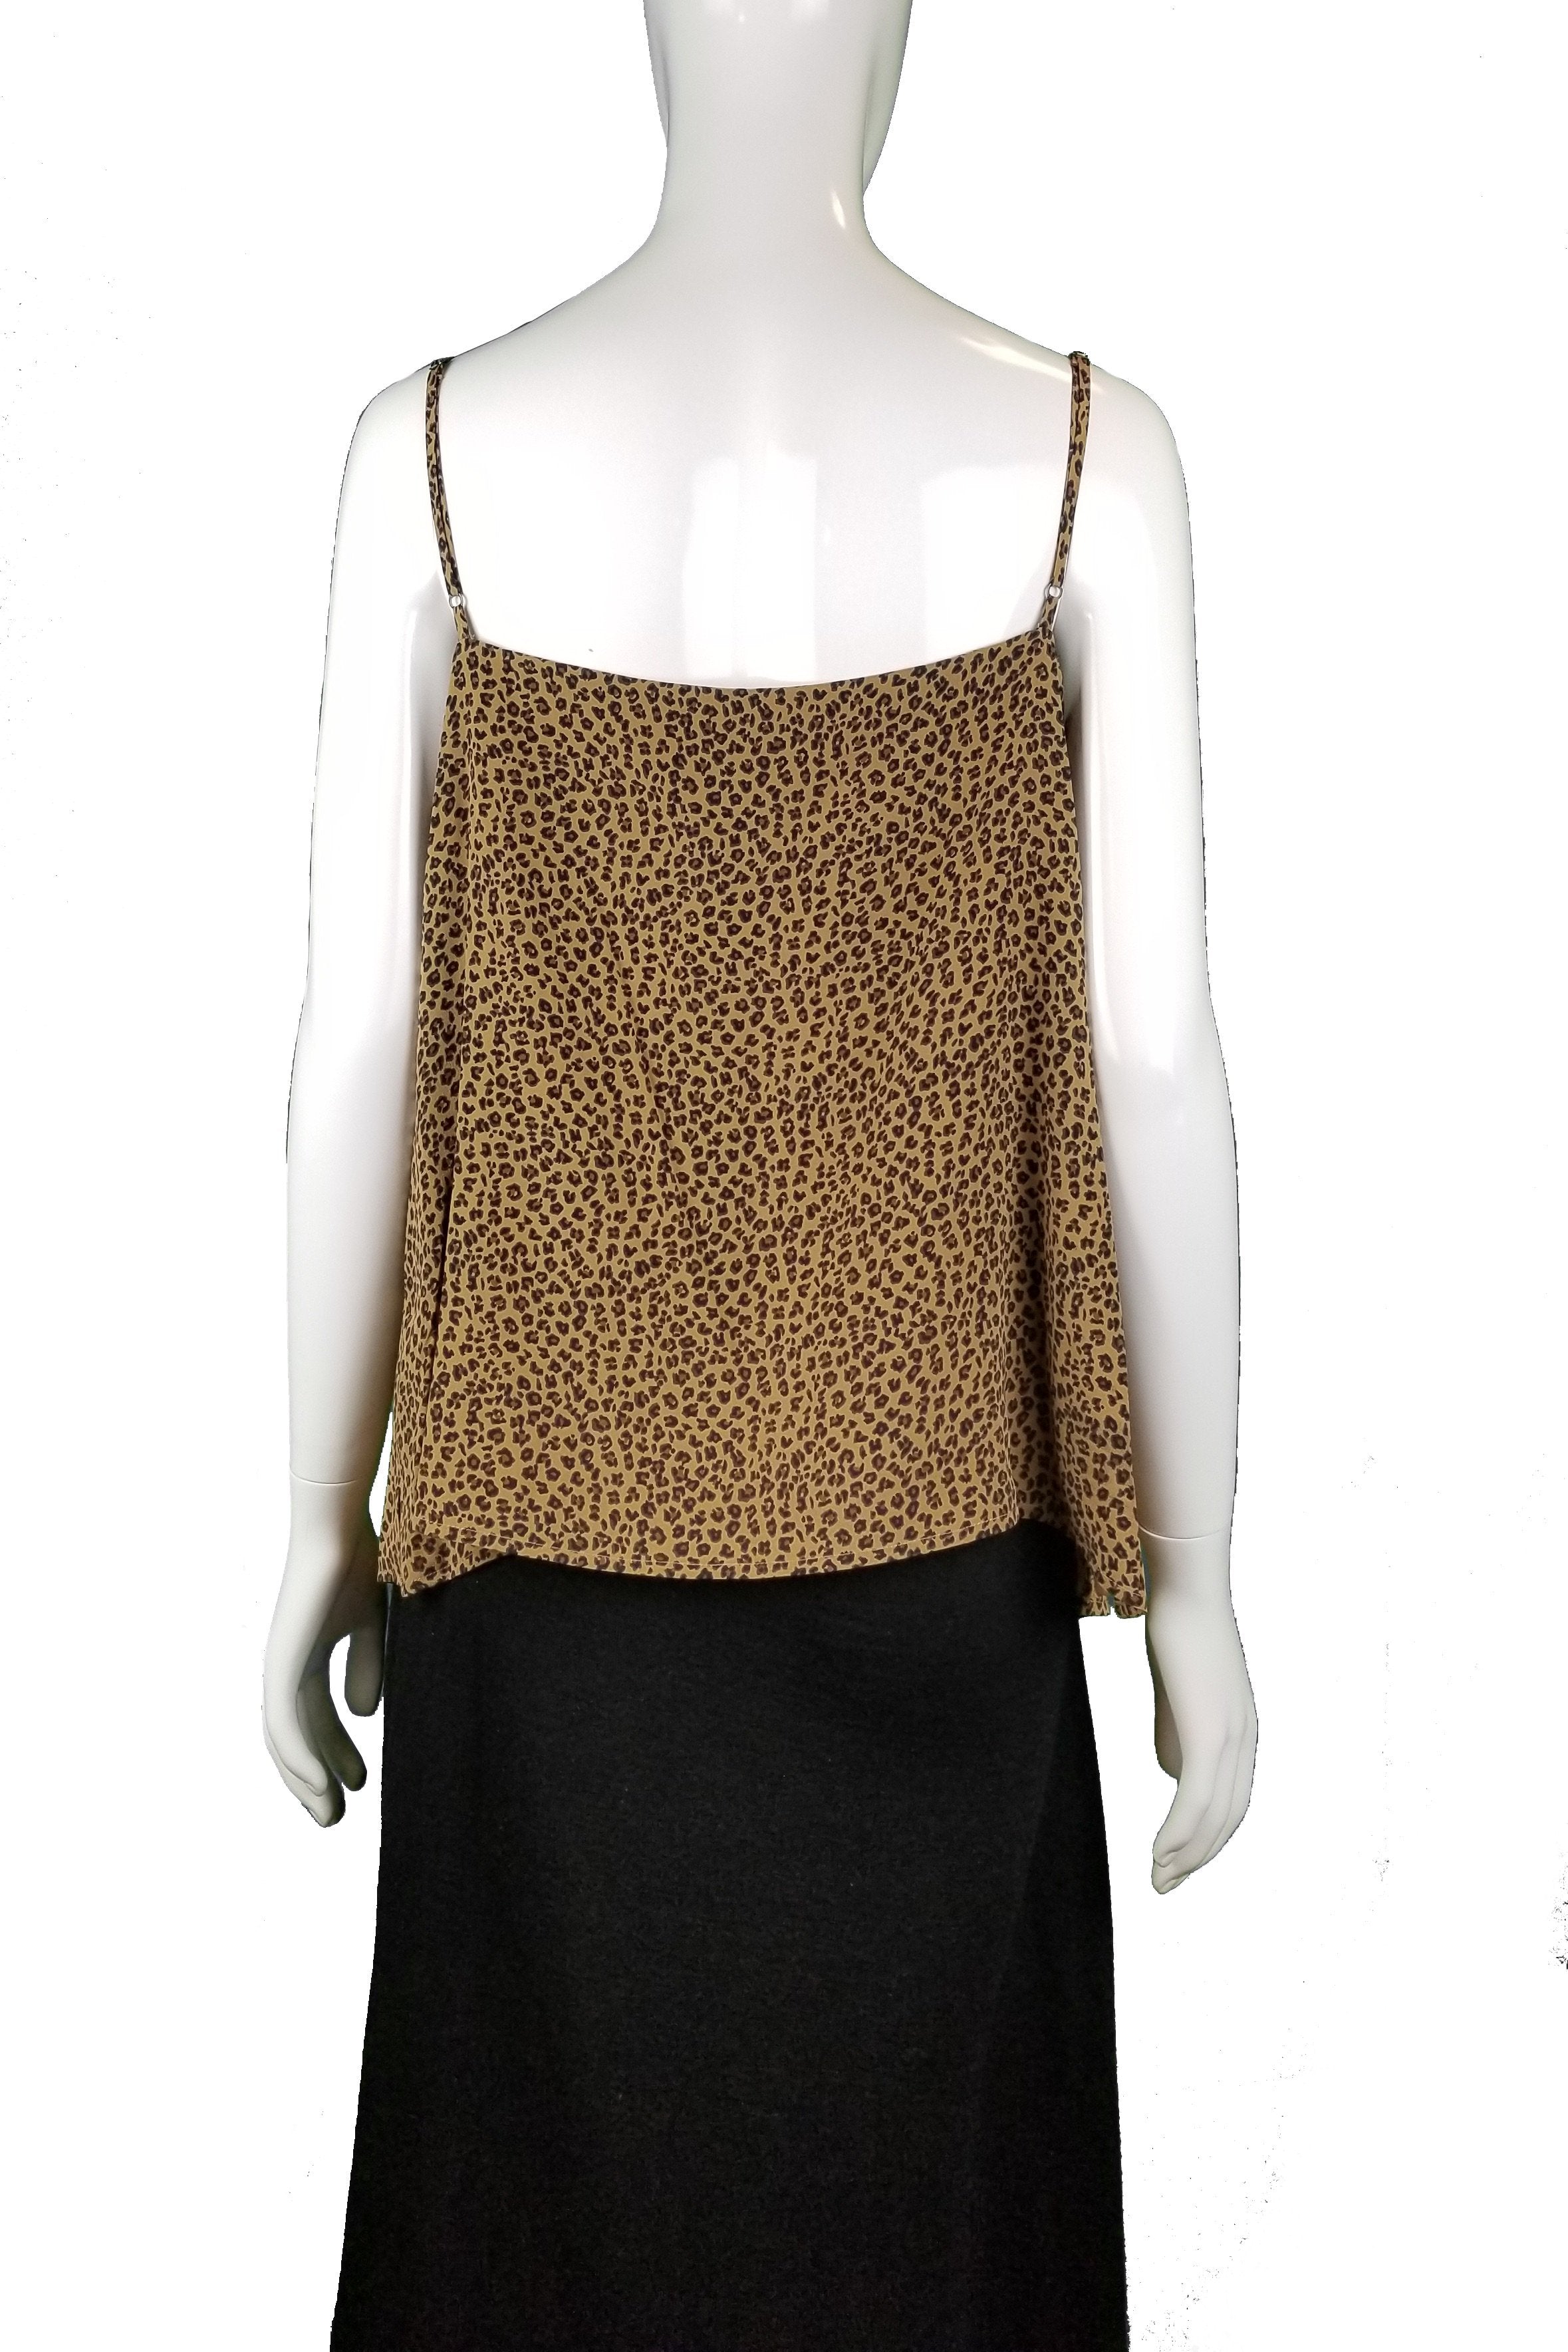 antistar leopard dress